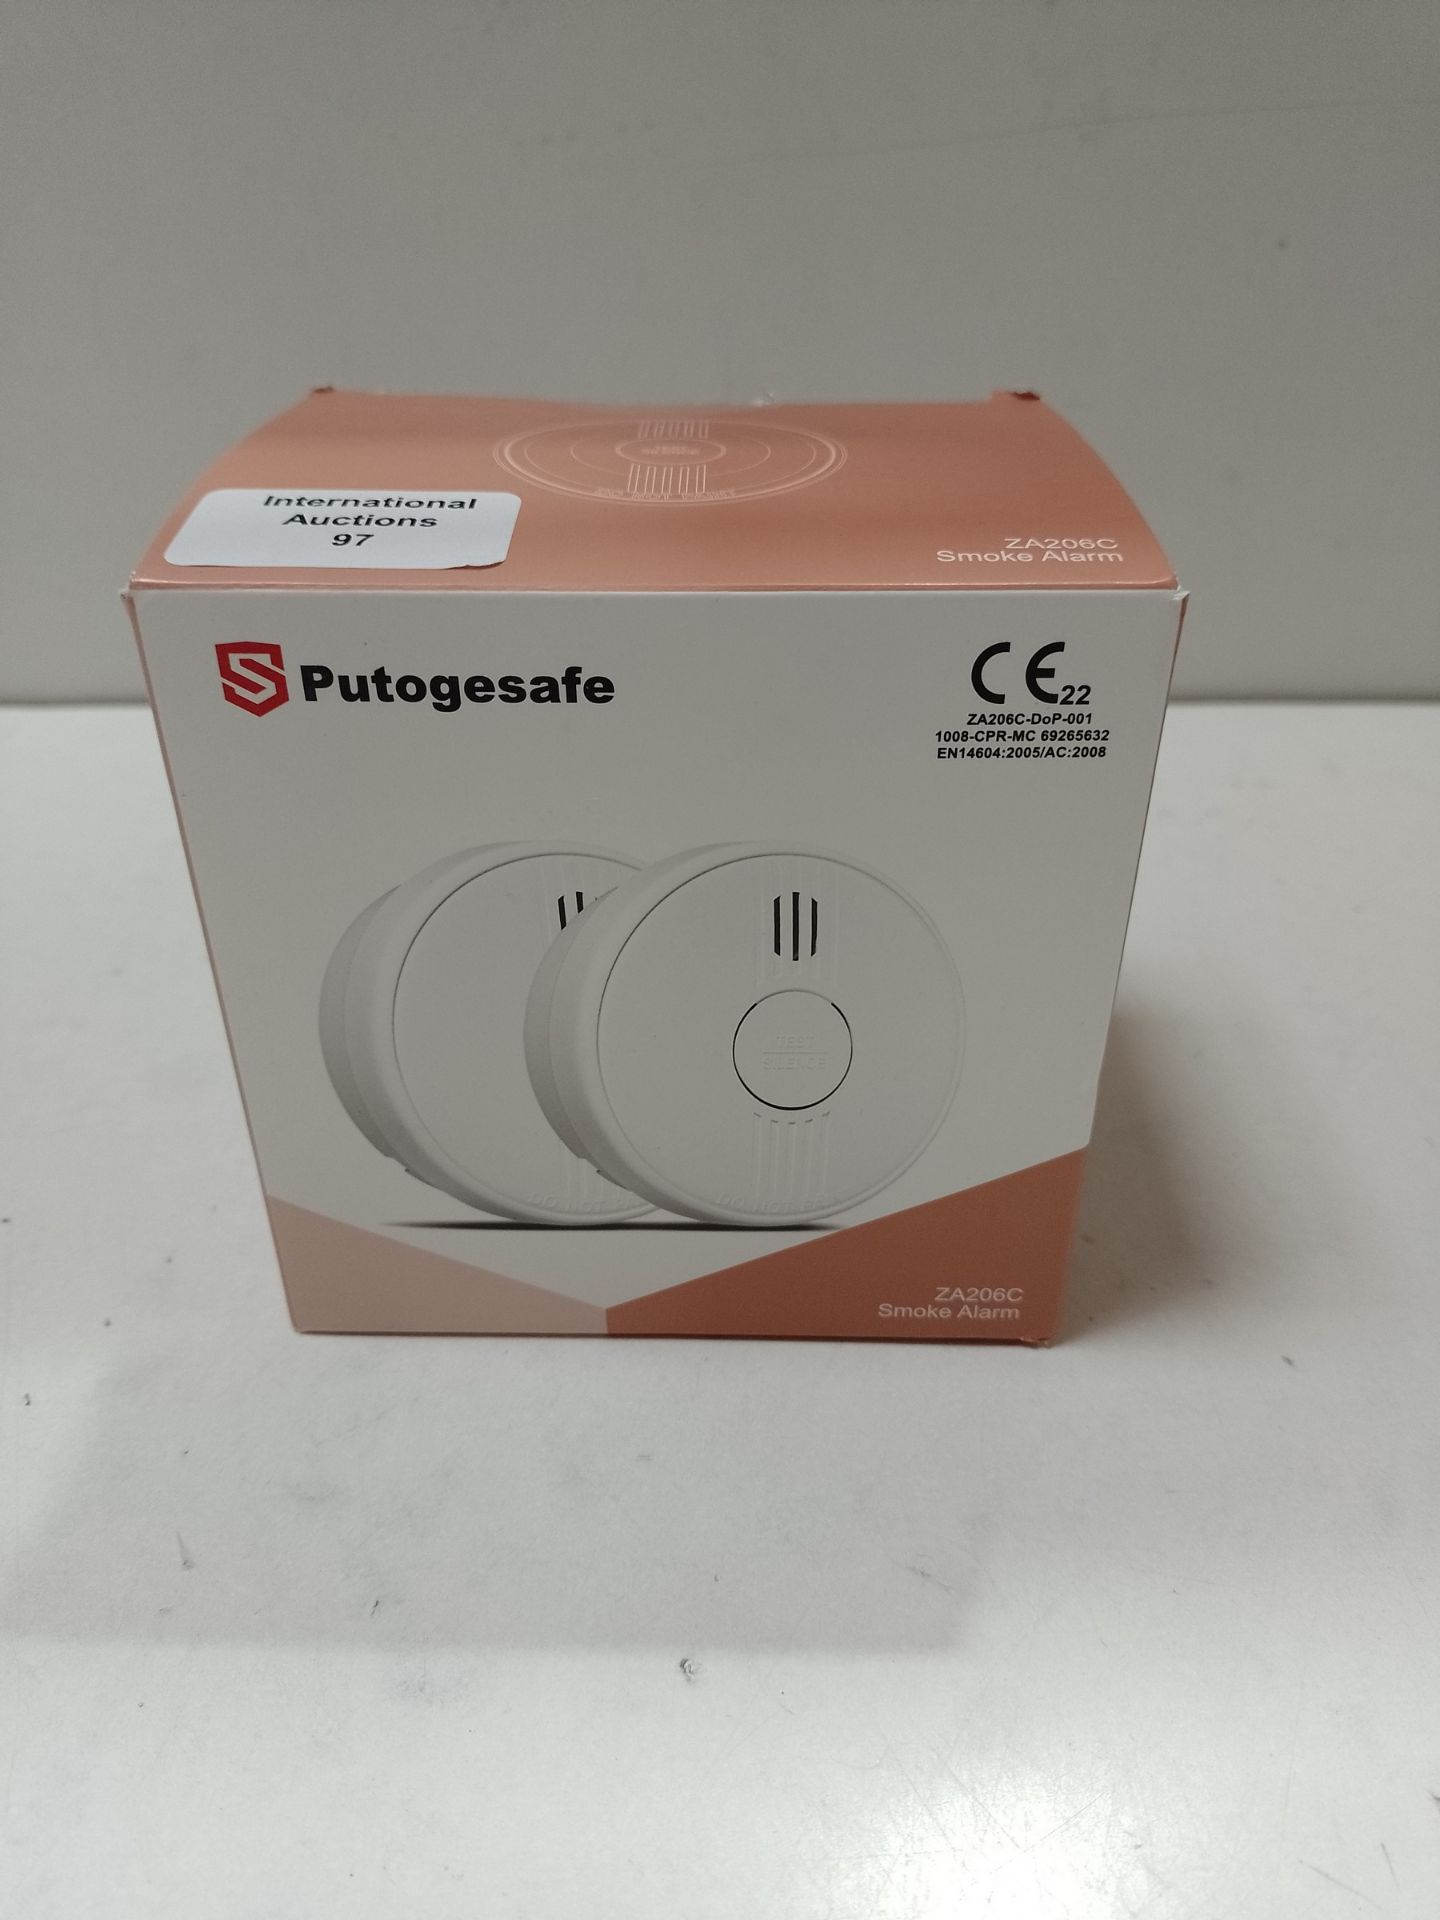 RRP £25.56 Putogesafe Smoke Alarm for Home - Image 2 of 2